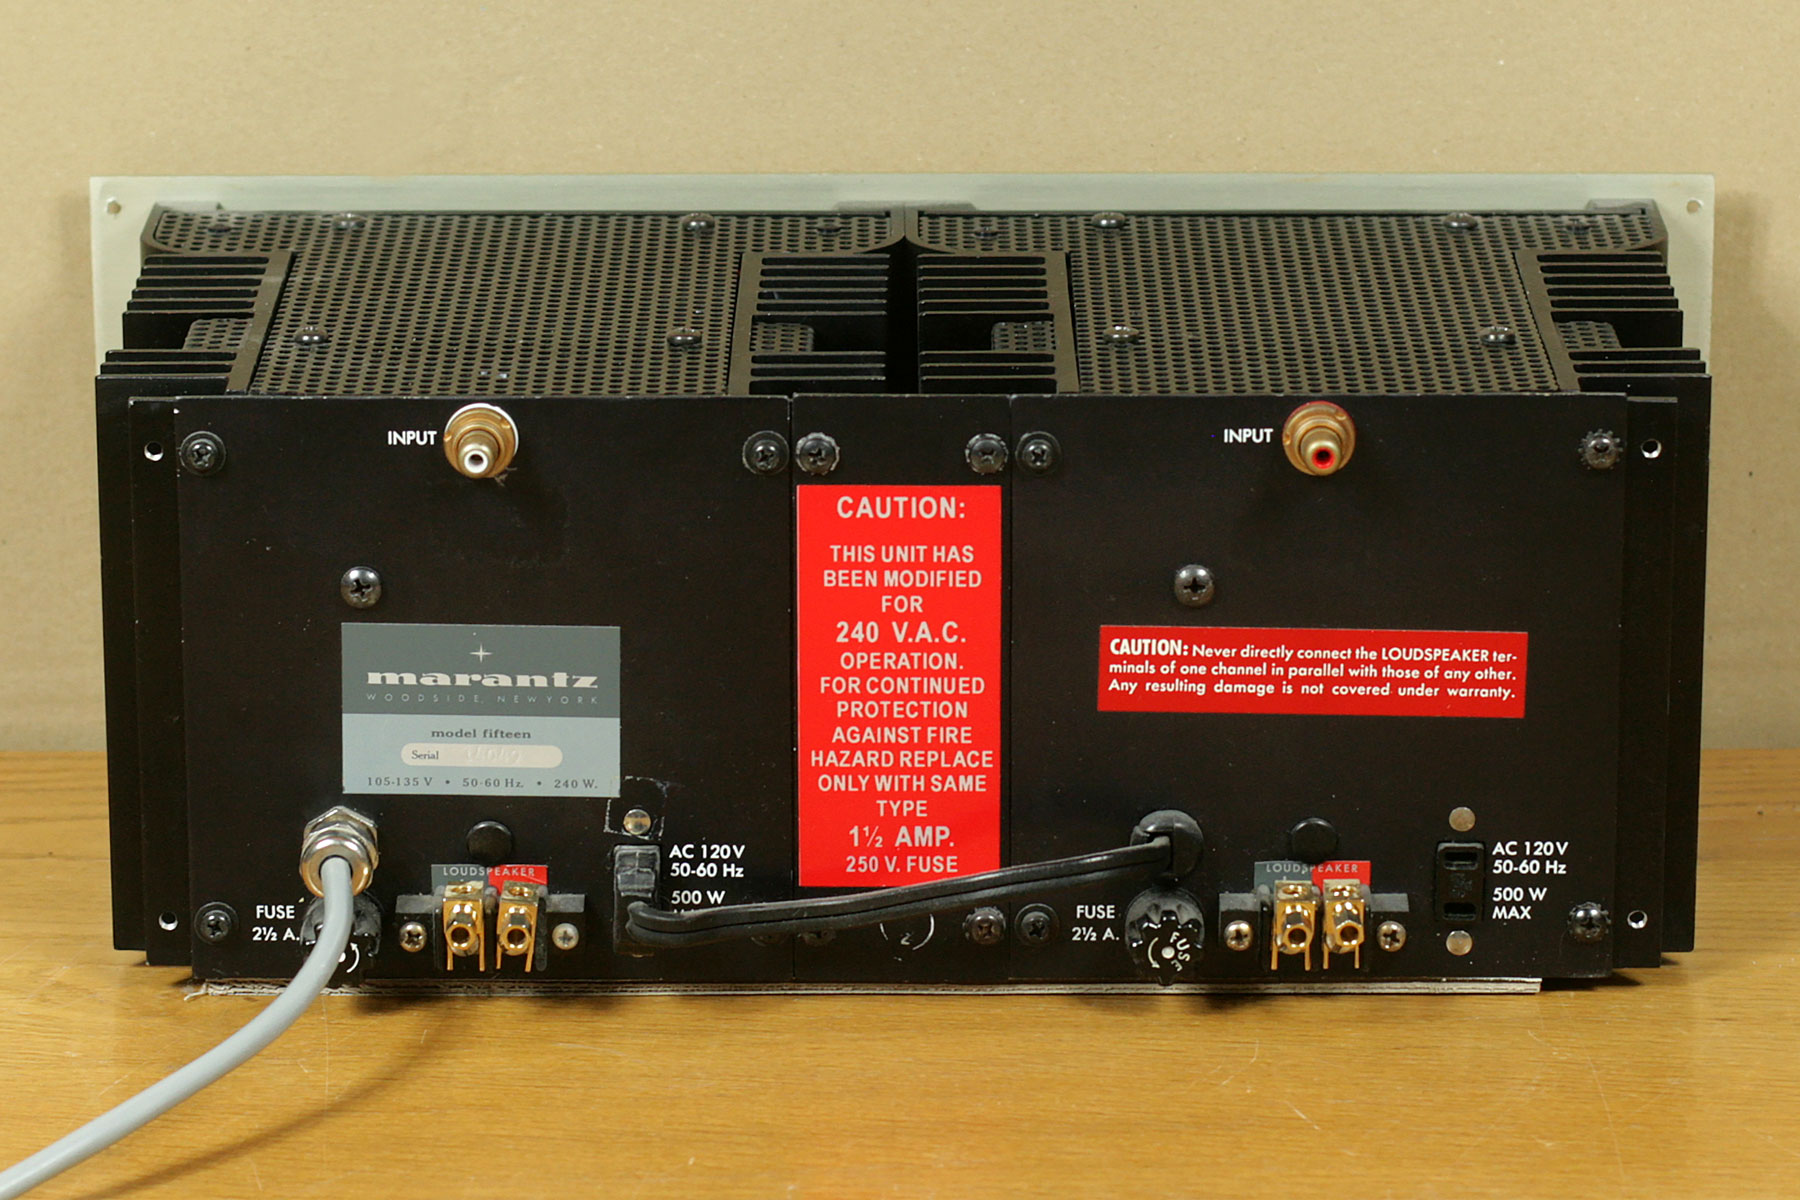 Marantz 15 - model fifteen • Stereo power amplifier • Specifications